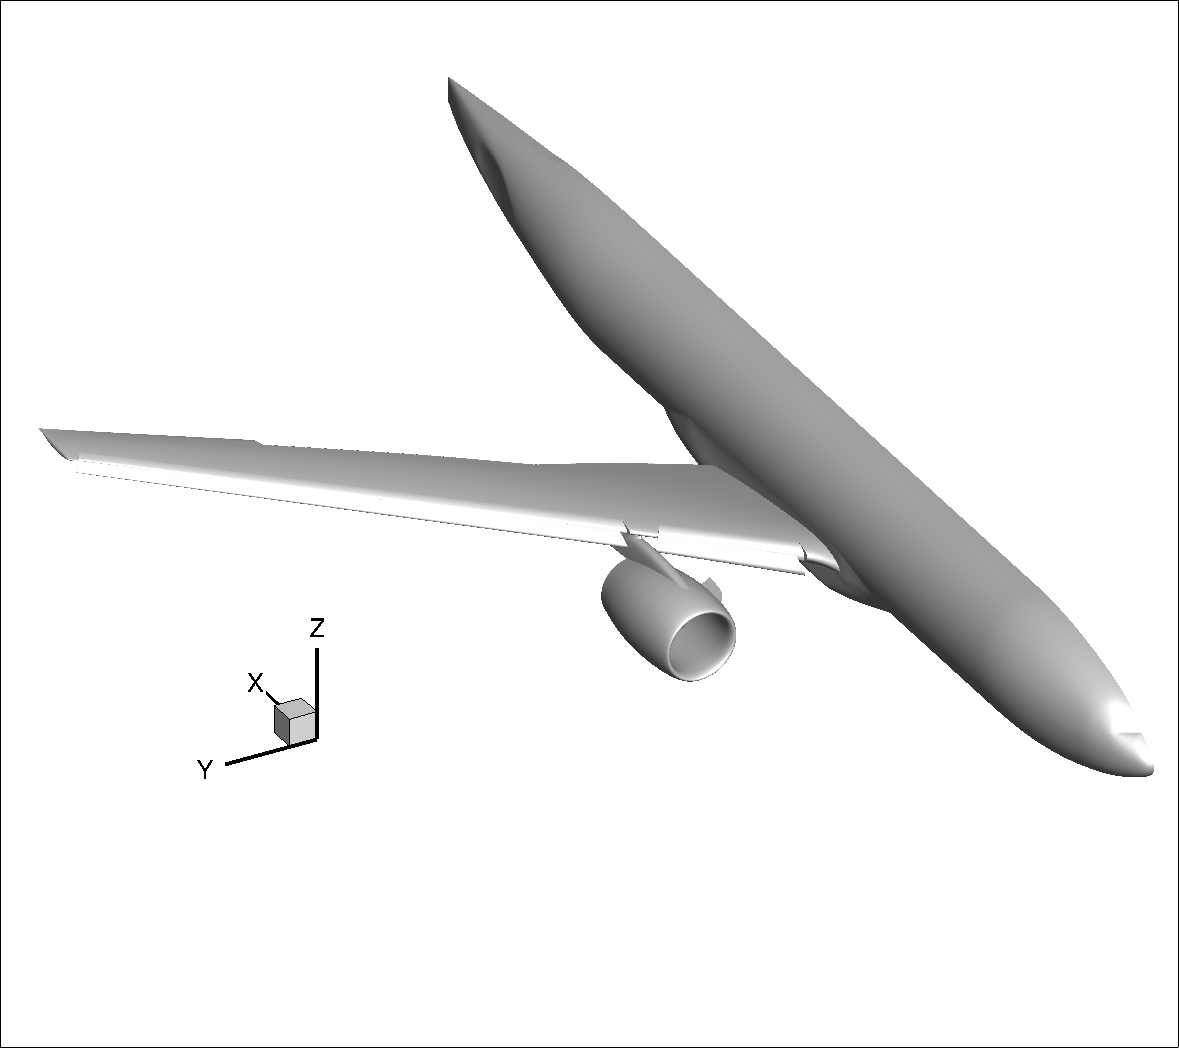 Geometry of HL-CRM model airplane